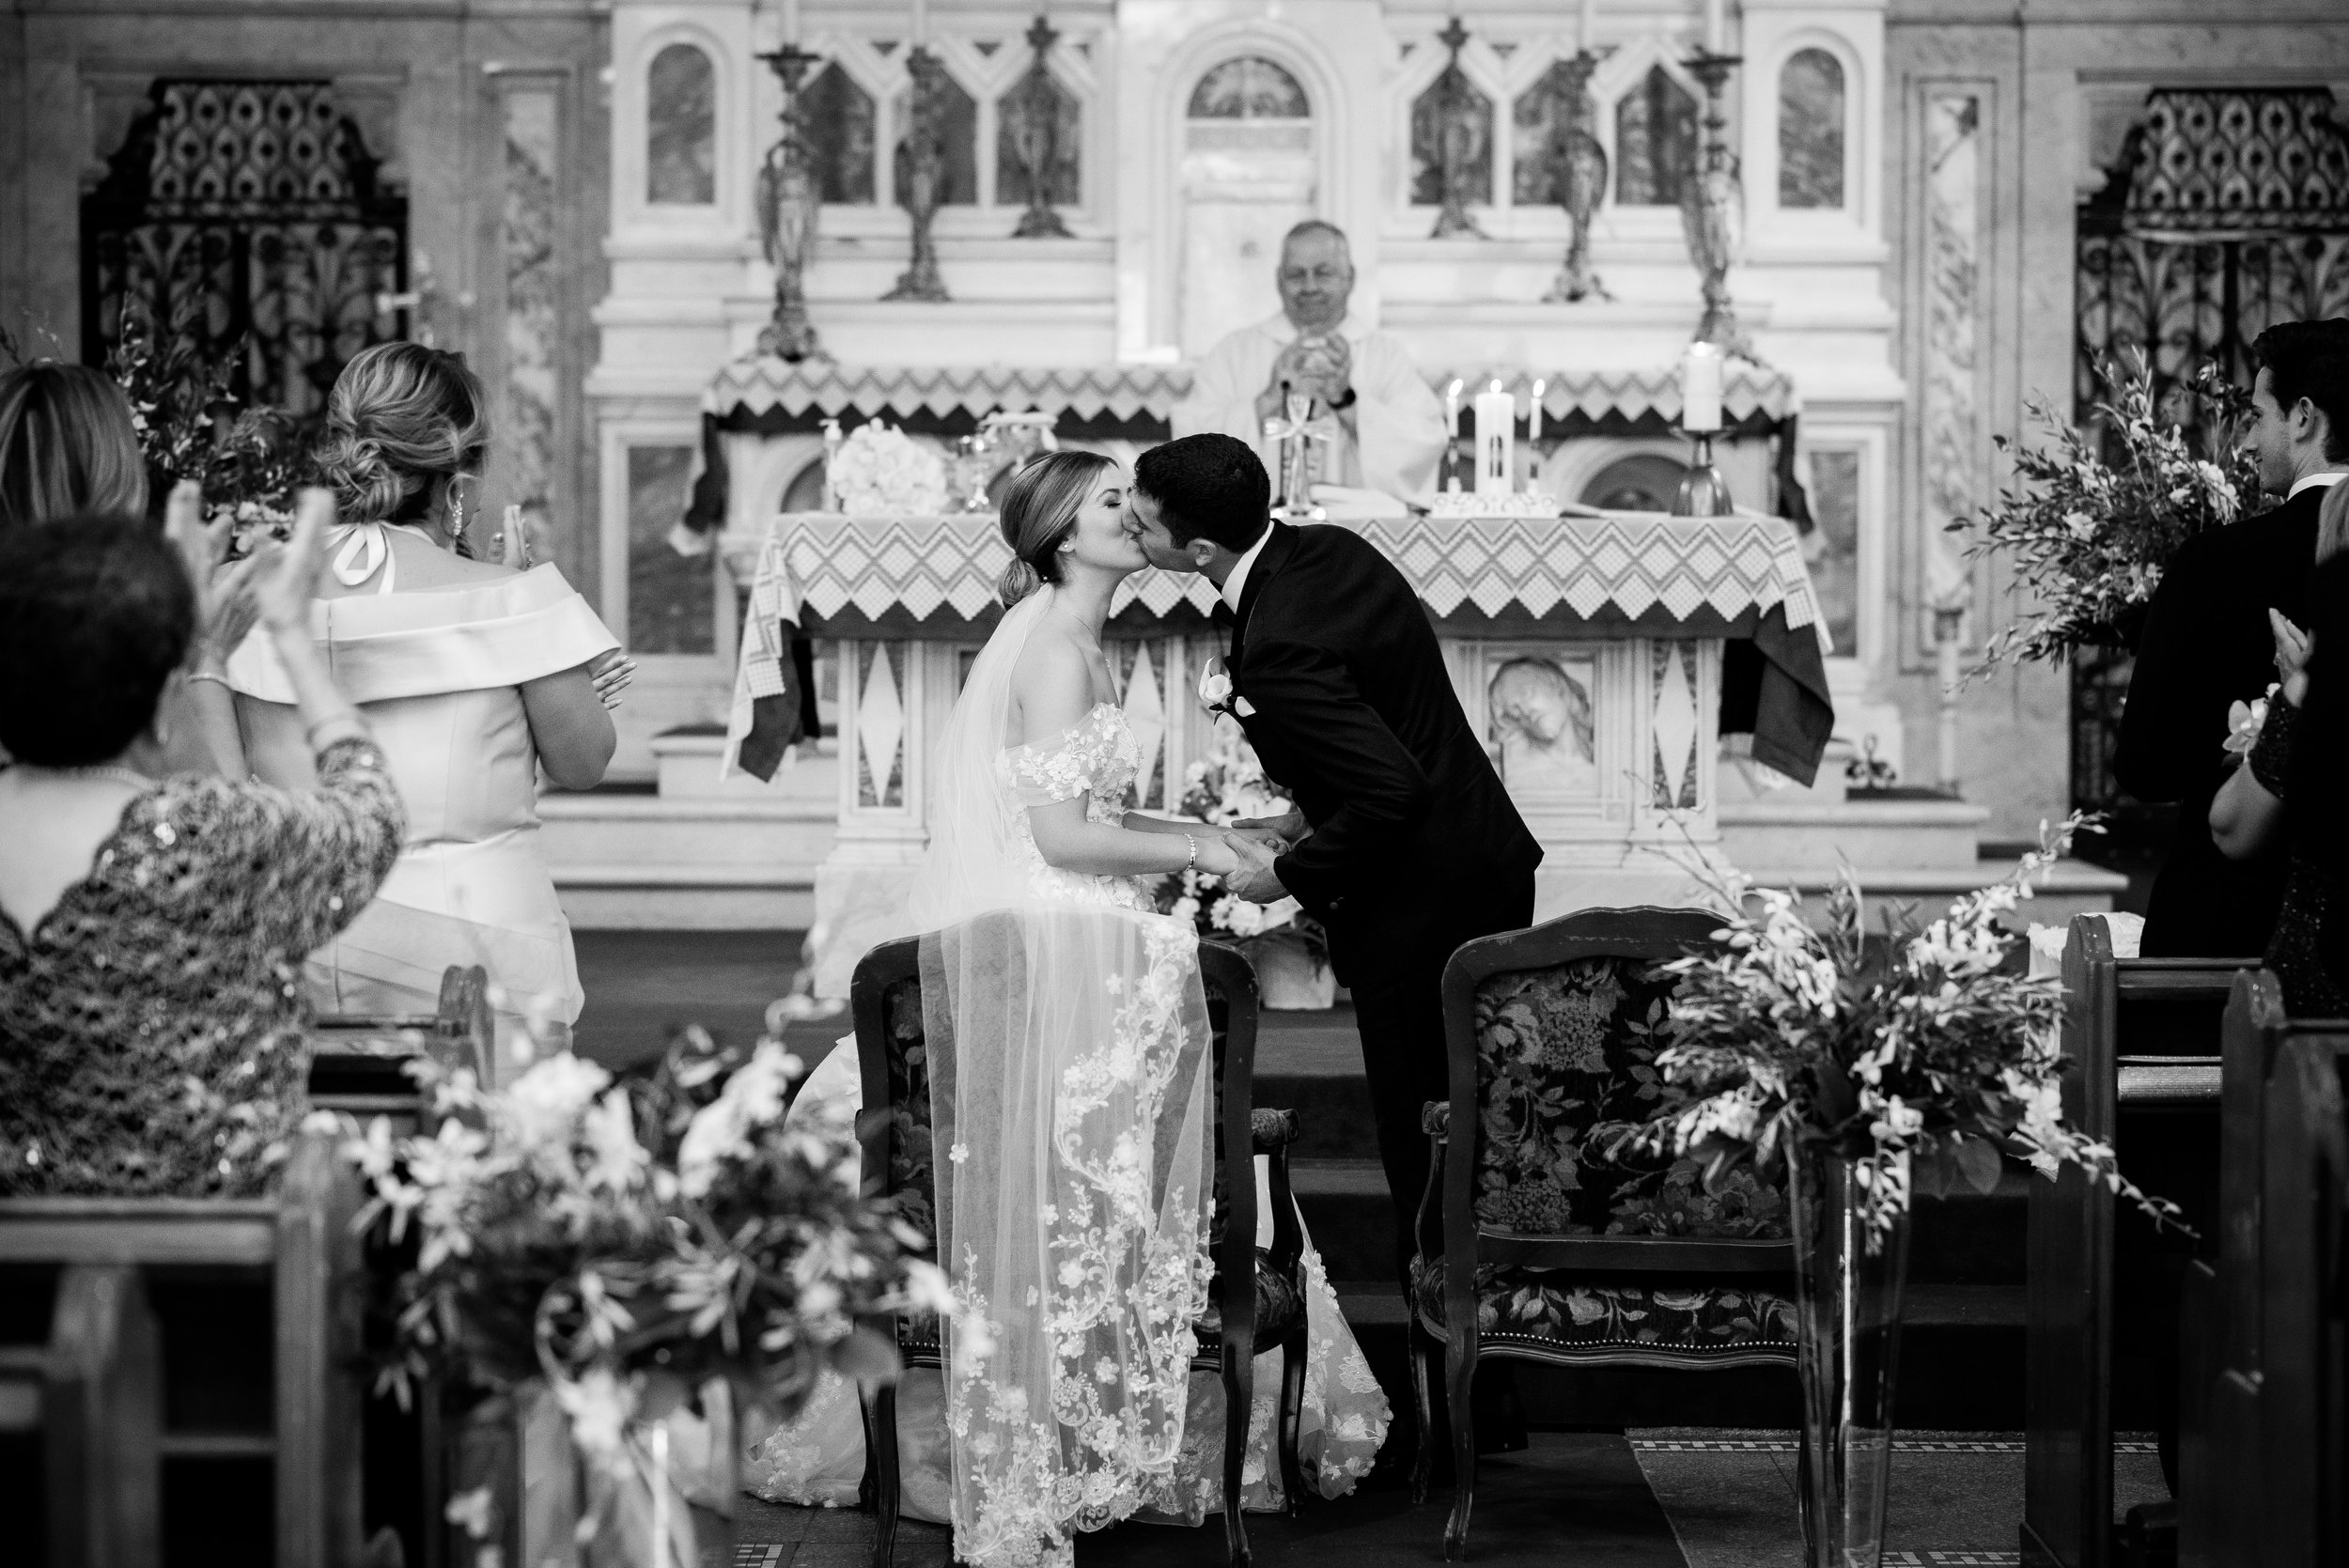 Wedding ceremony photograph in a church in ottawa (Copy)